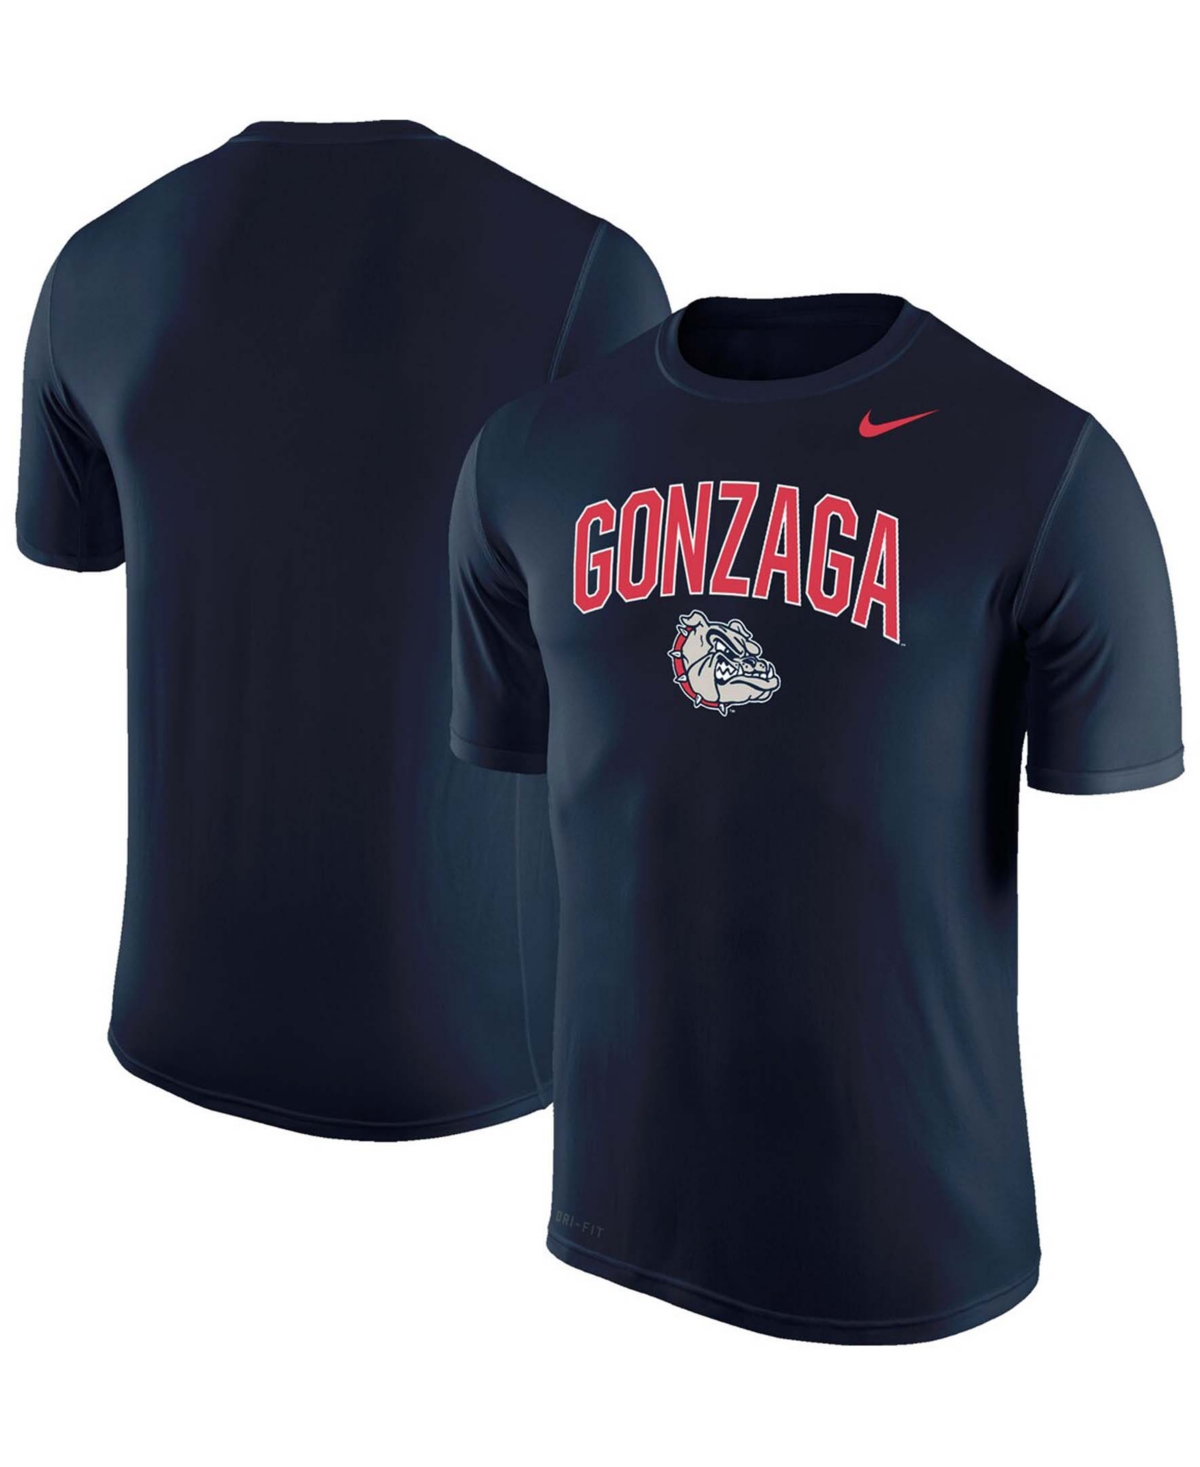 UPC 191182746623 product image for Nike Men's Gonzaga Bulldogs Arch Over Logo Performance T-Shirt | upcitemdb.com